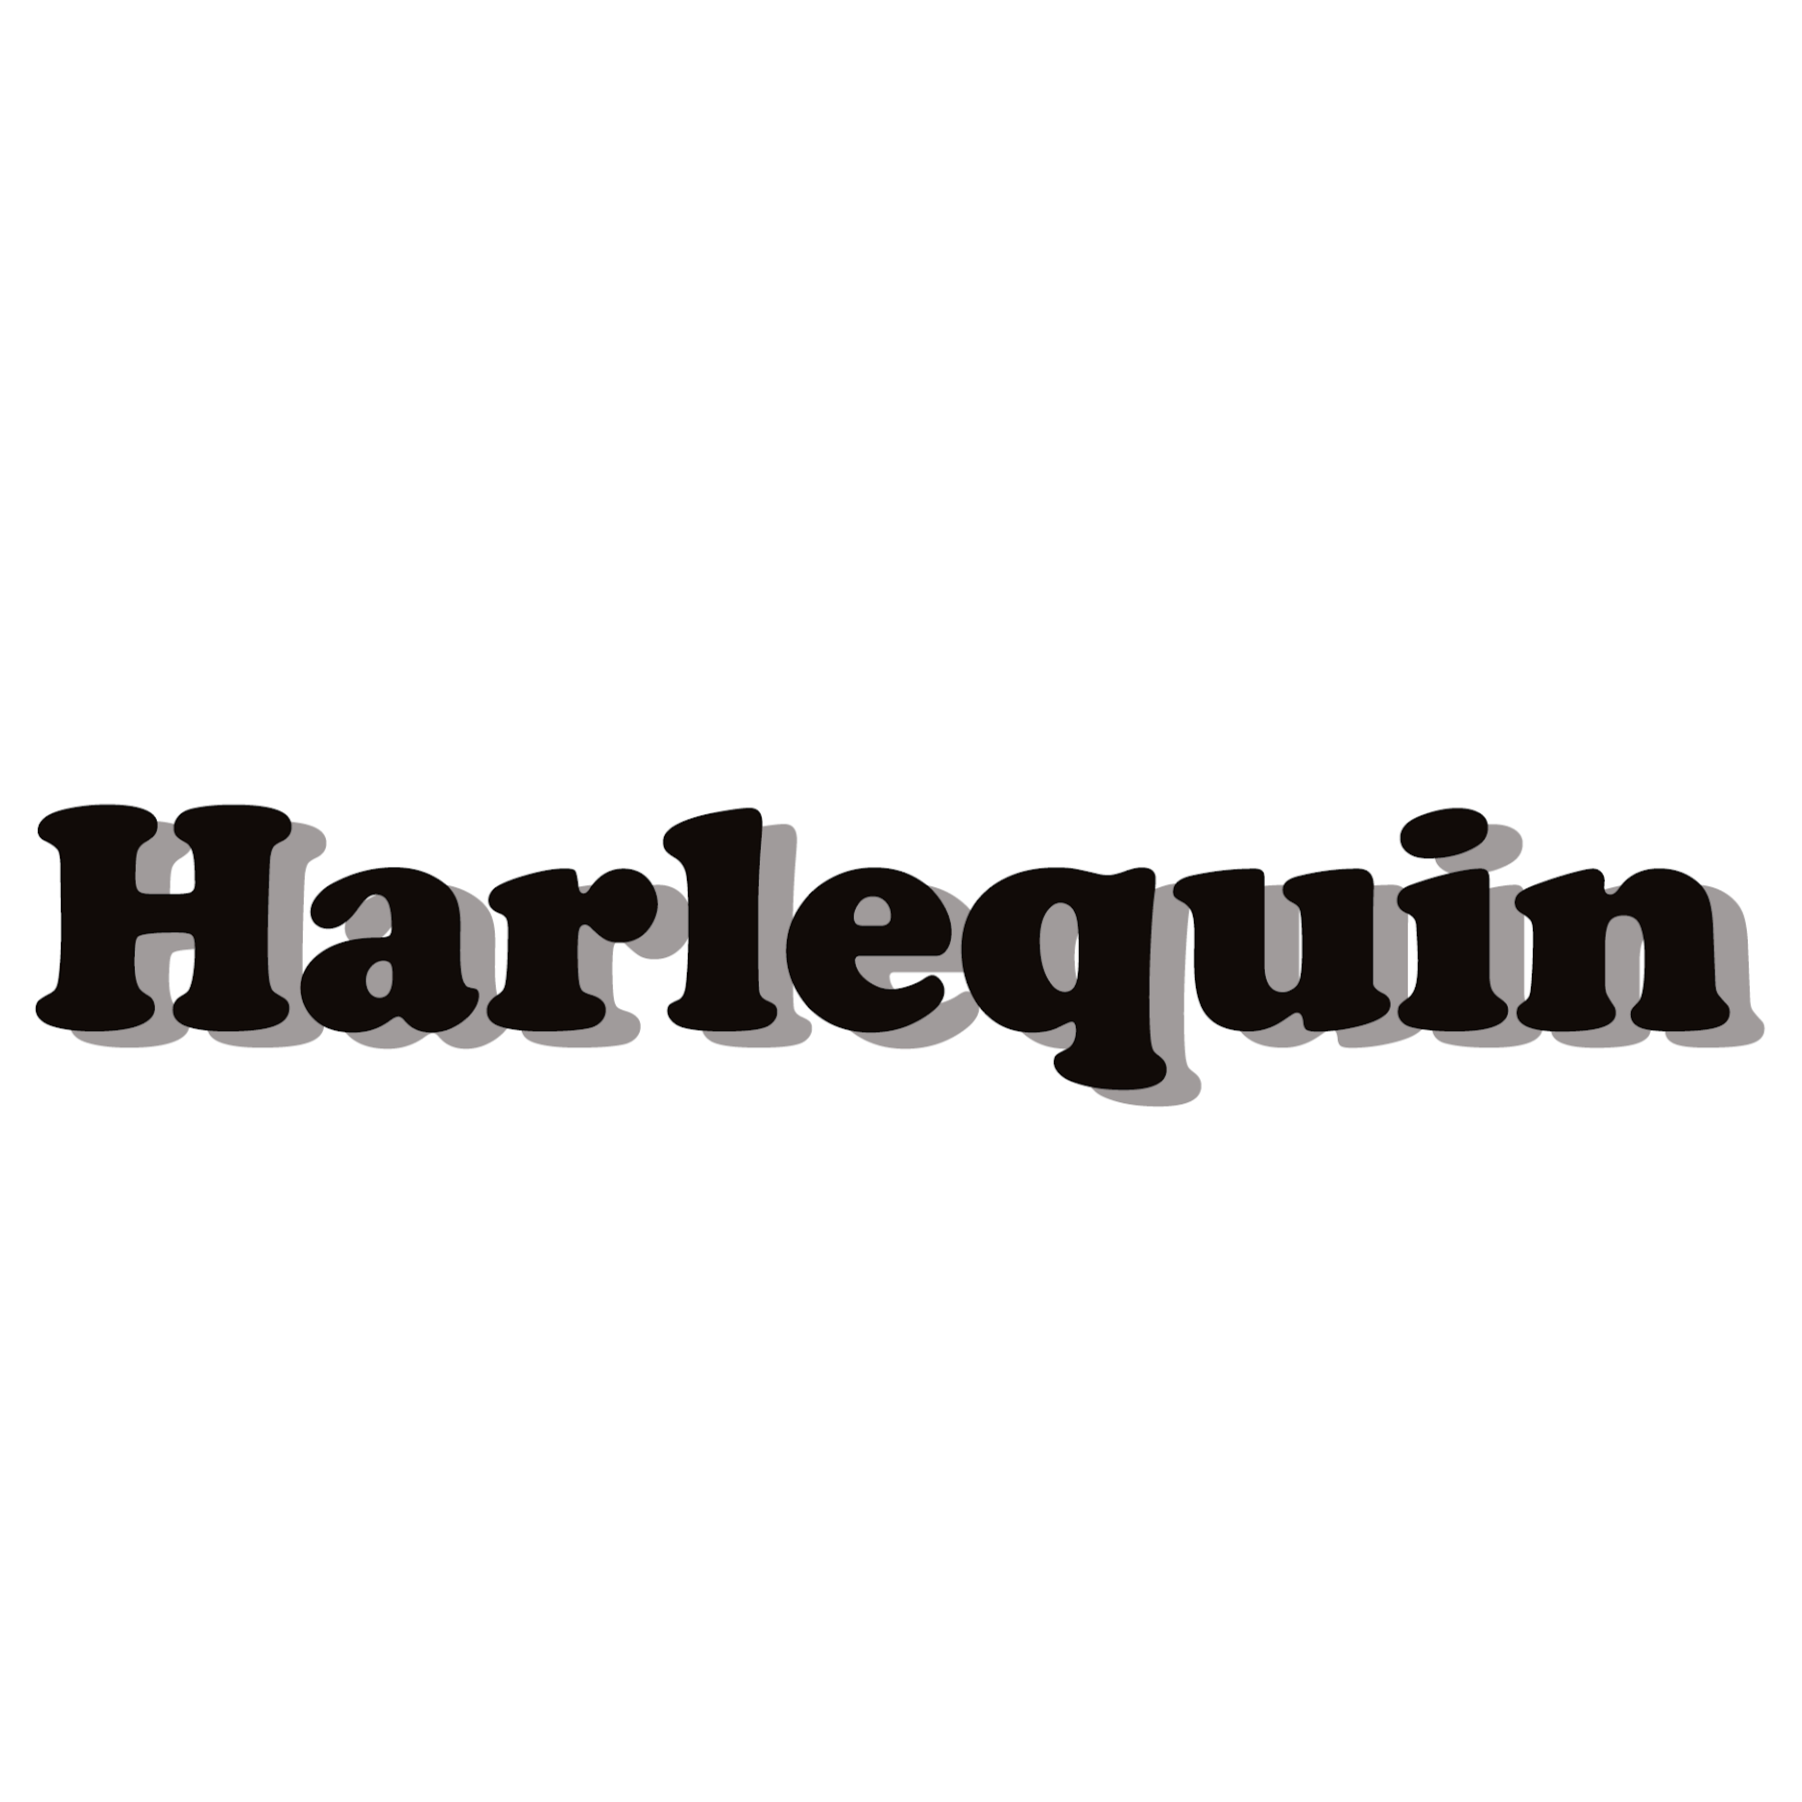 Harlequin _iwnl